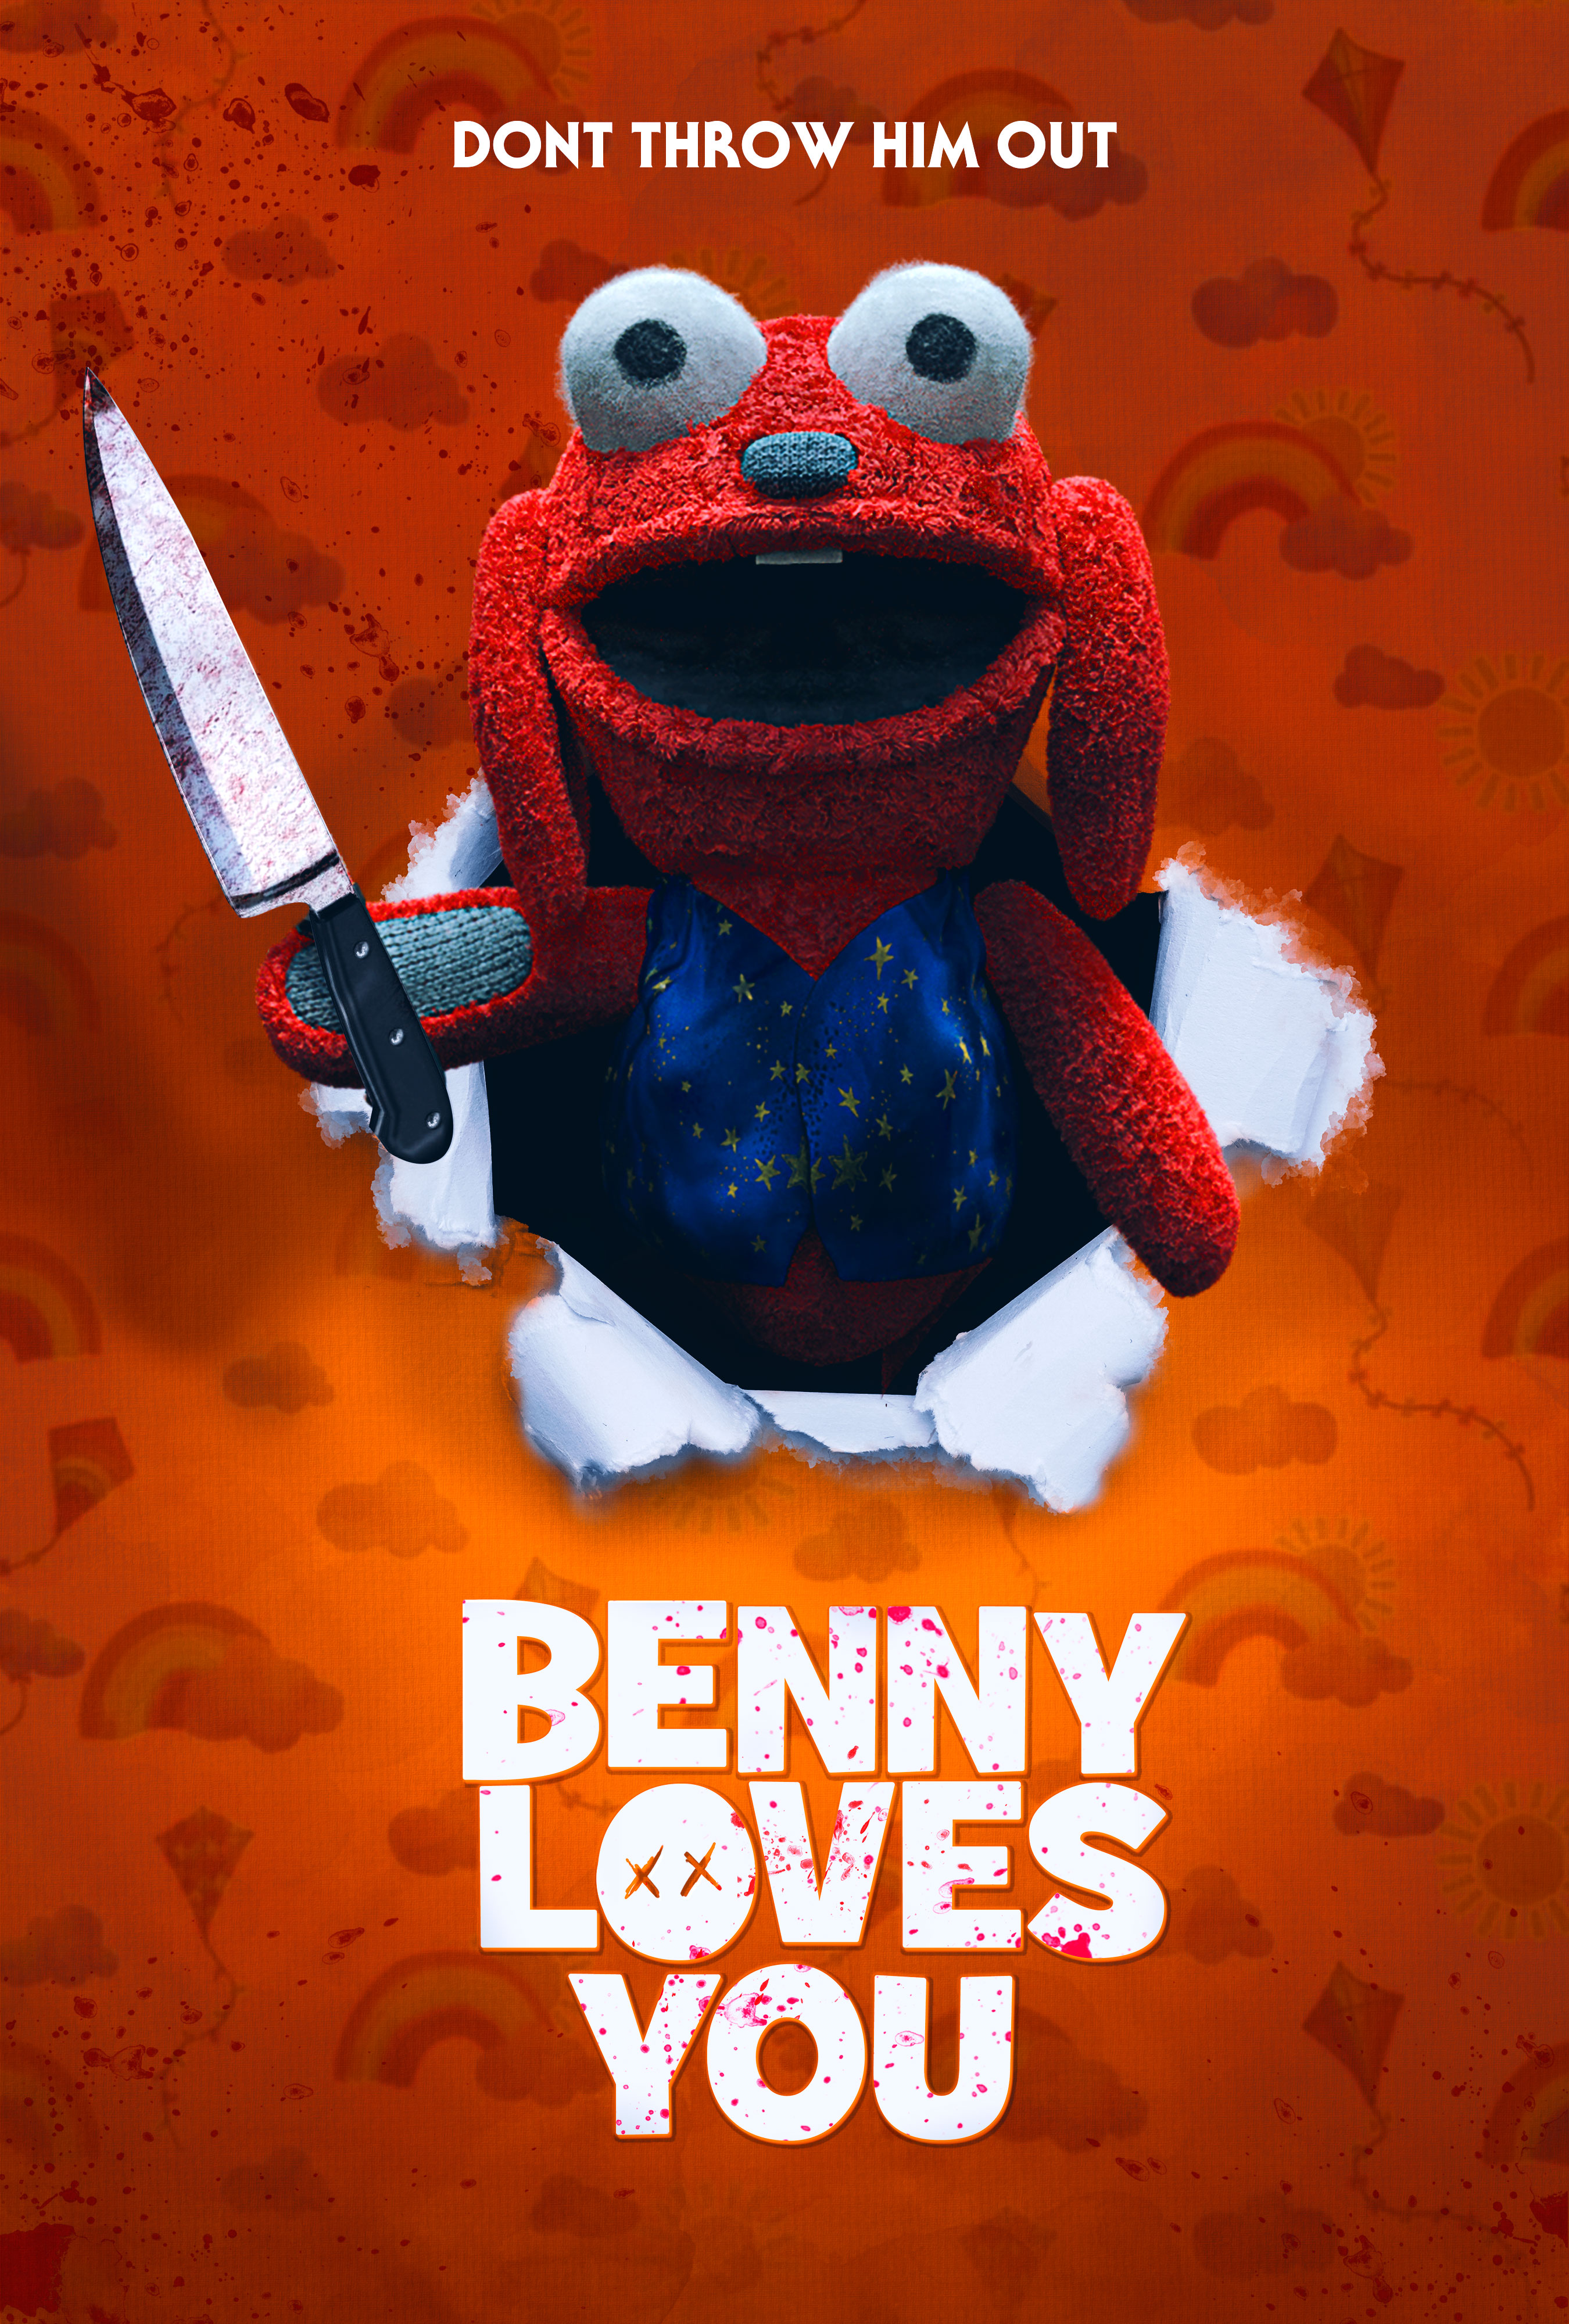 Benny Loves You Poster